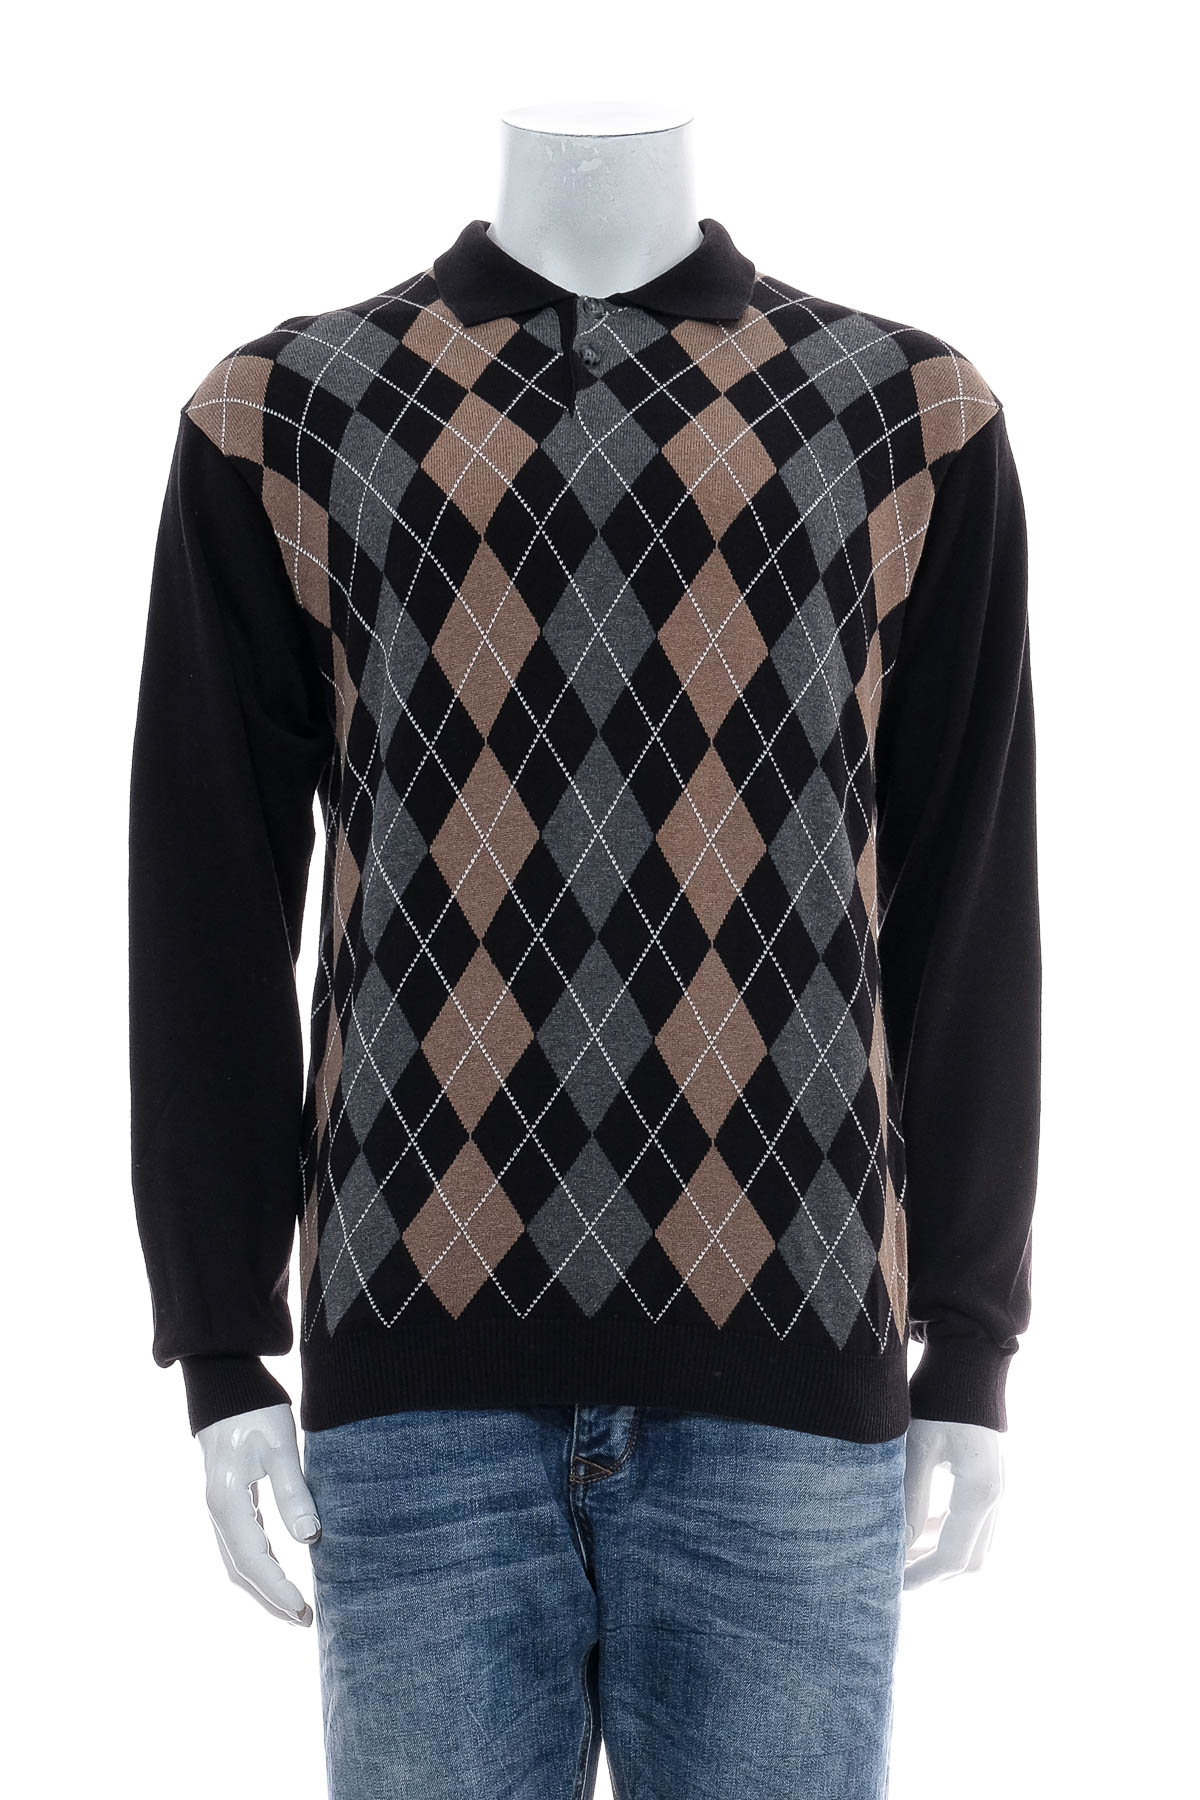 Men's sweater - Croft & Barrow - 0